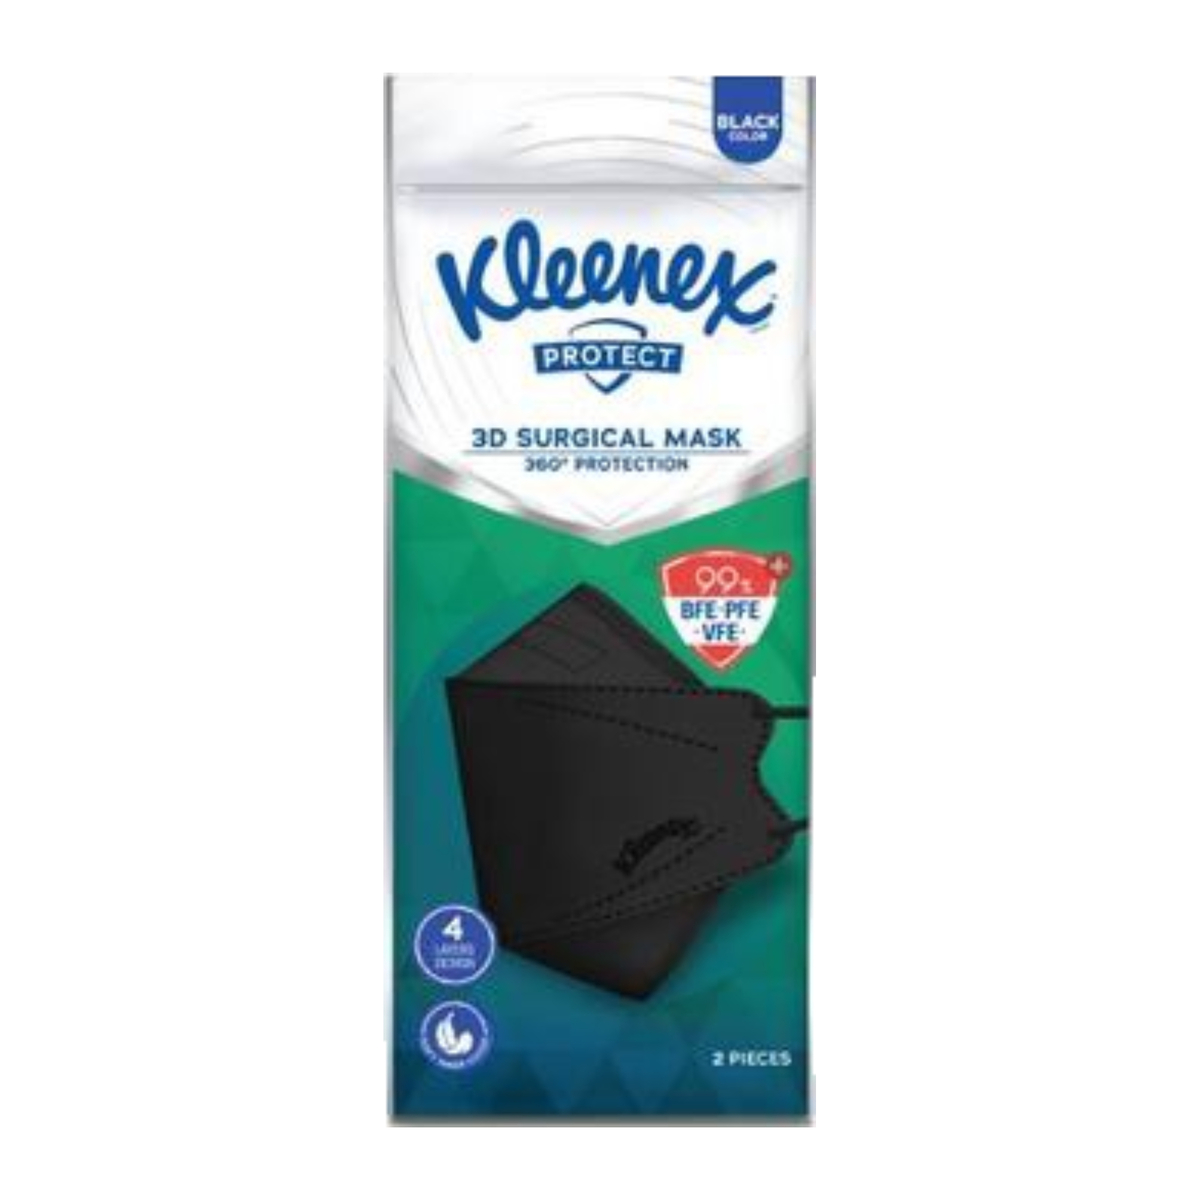 Kleenex Protect Mask 3D 2pcs